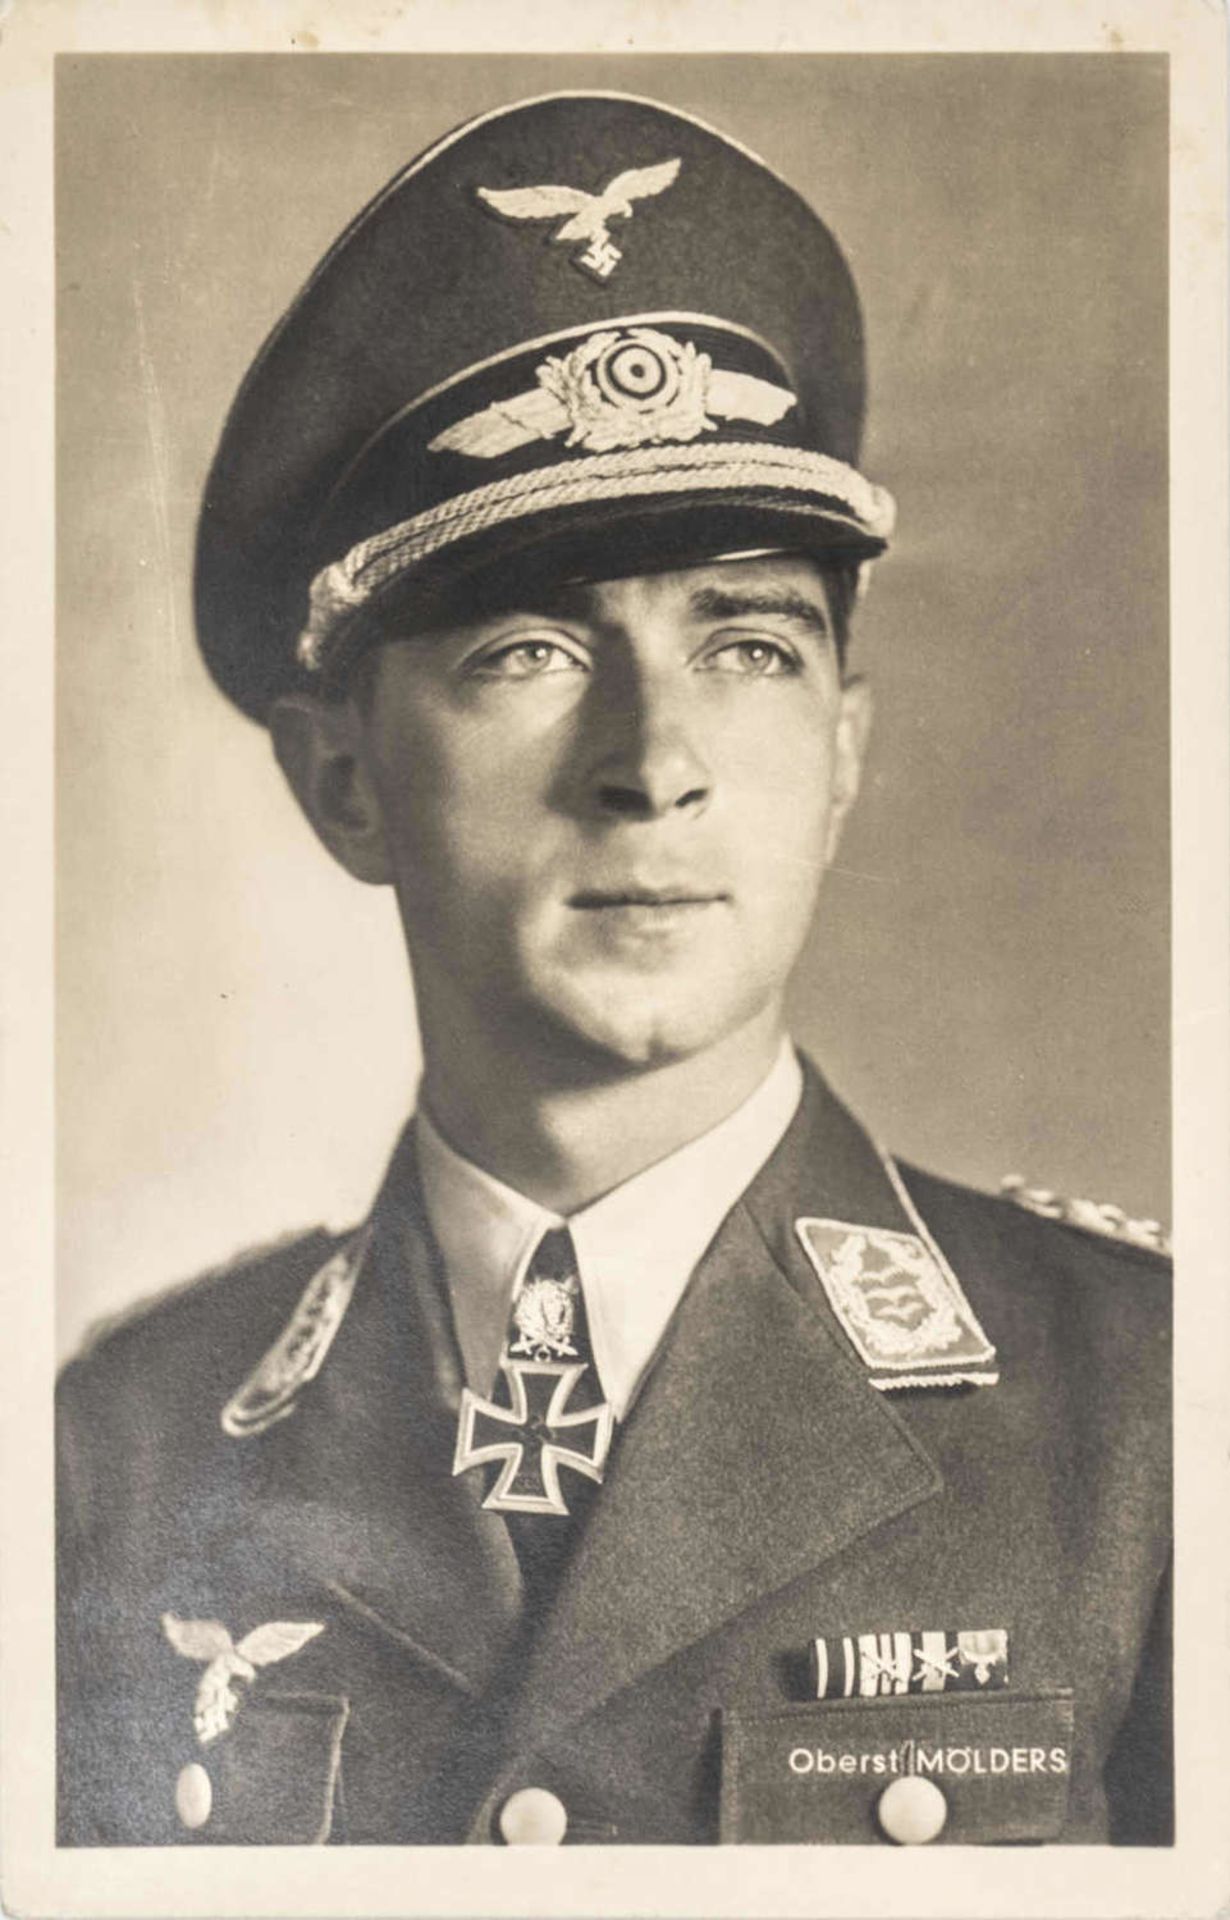 Drittes Reich, Ritterkreuzträger Oberst Mölders. Ungelaufen. Third Reich, Knight's Cross holder